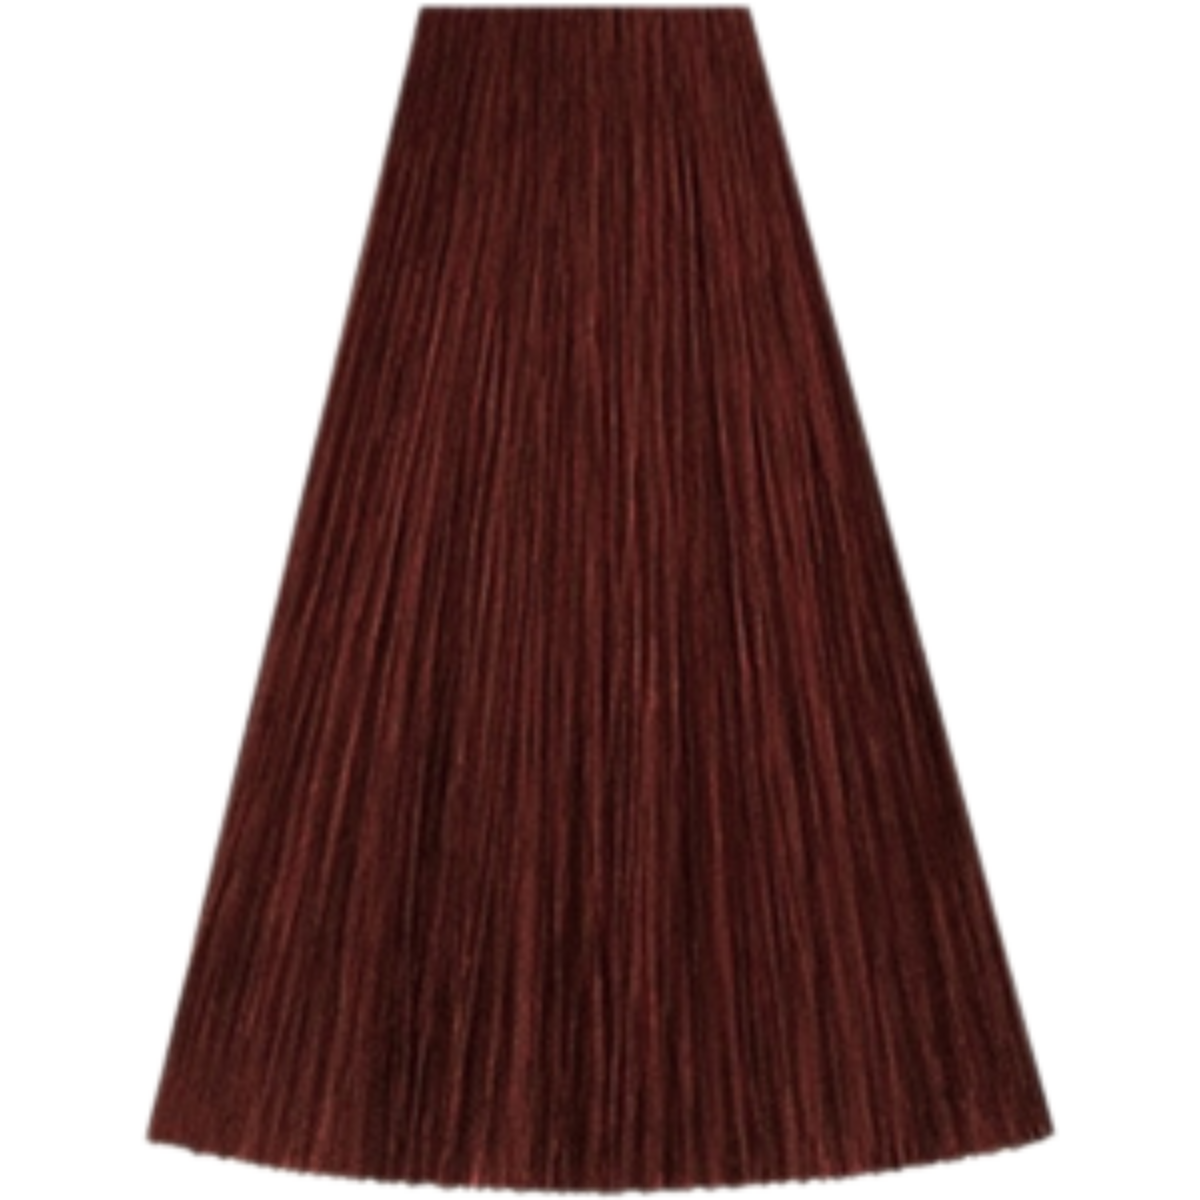 צבע שיער גוון 5/46 LIGHT BROWN RED VIOLET קאדוס KADUS צבע לשיער 60 גרם